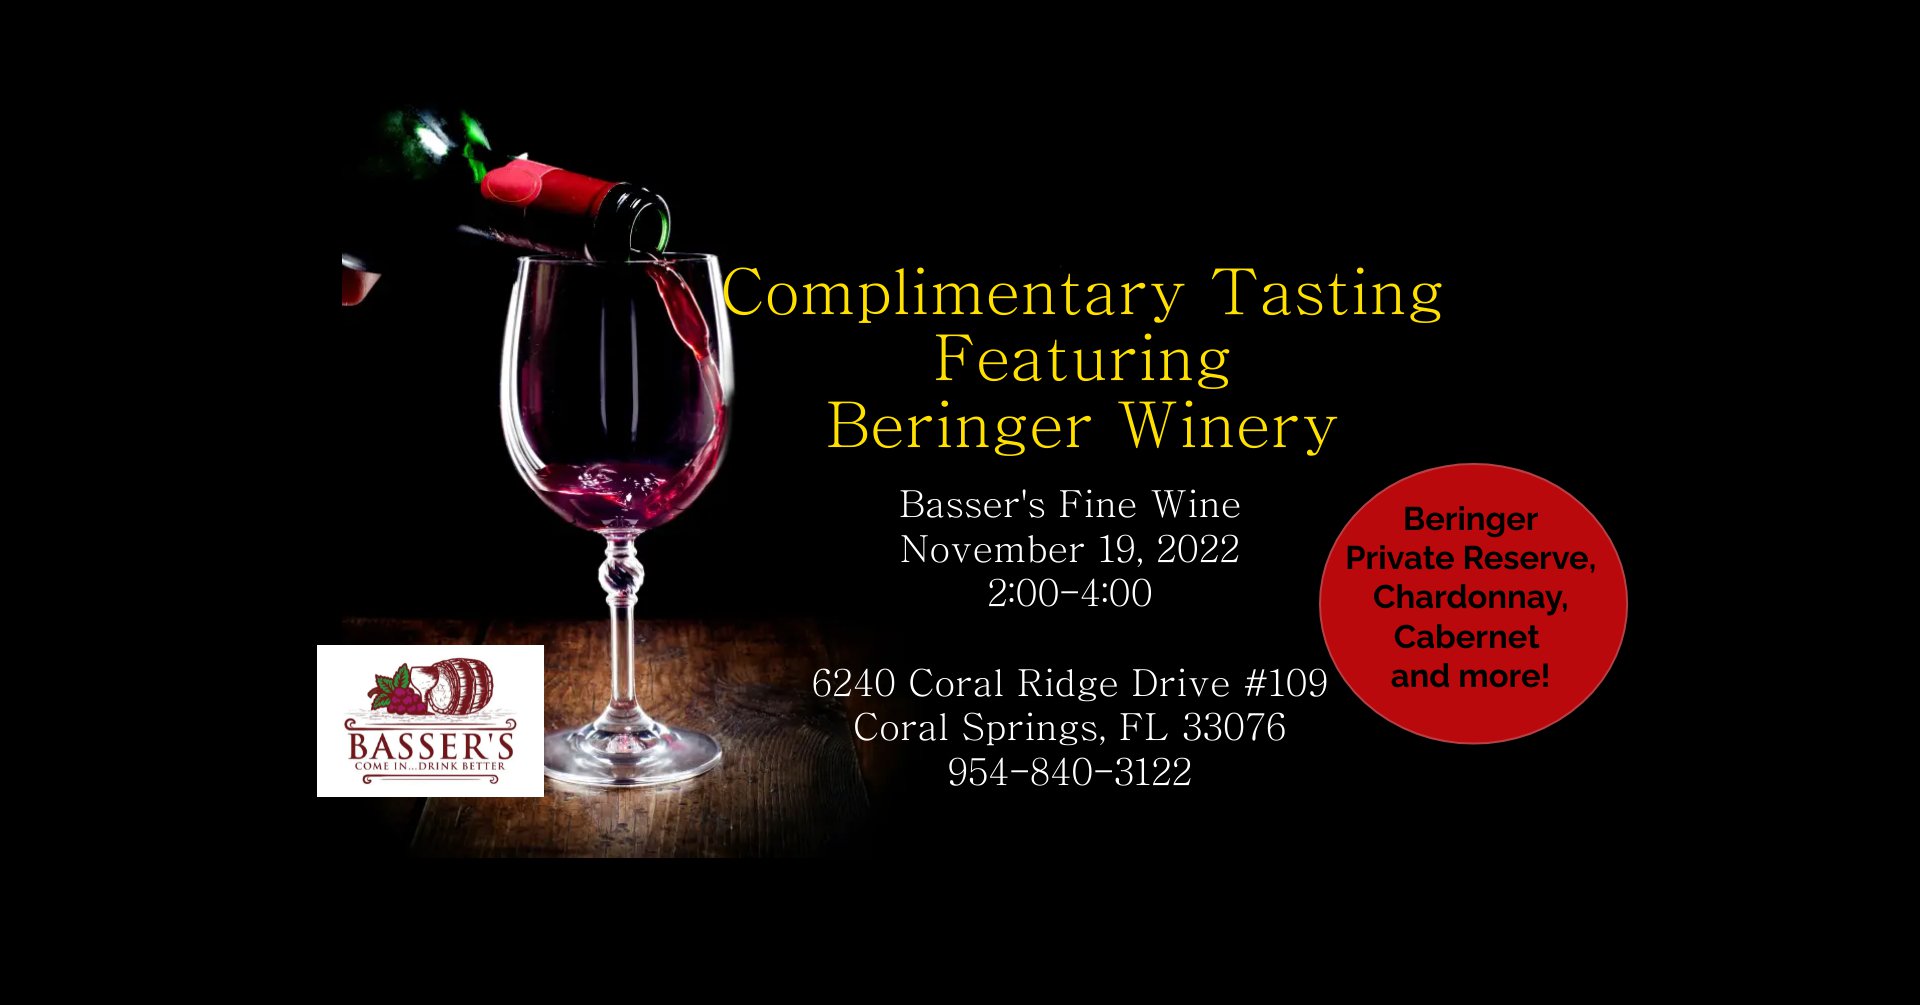 wine tasting event poster